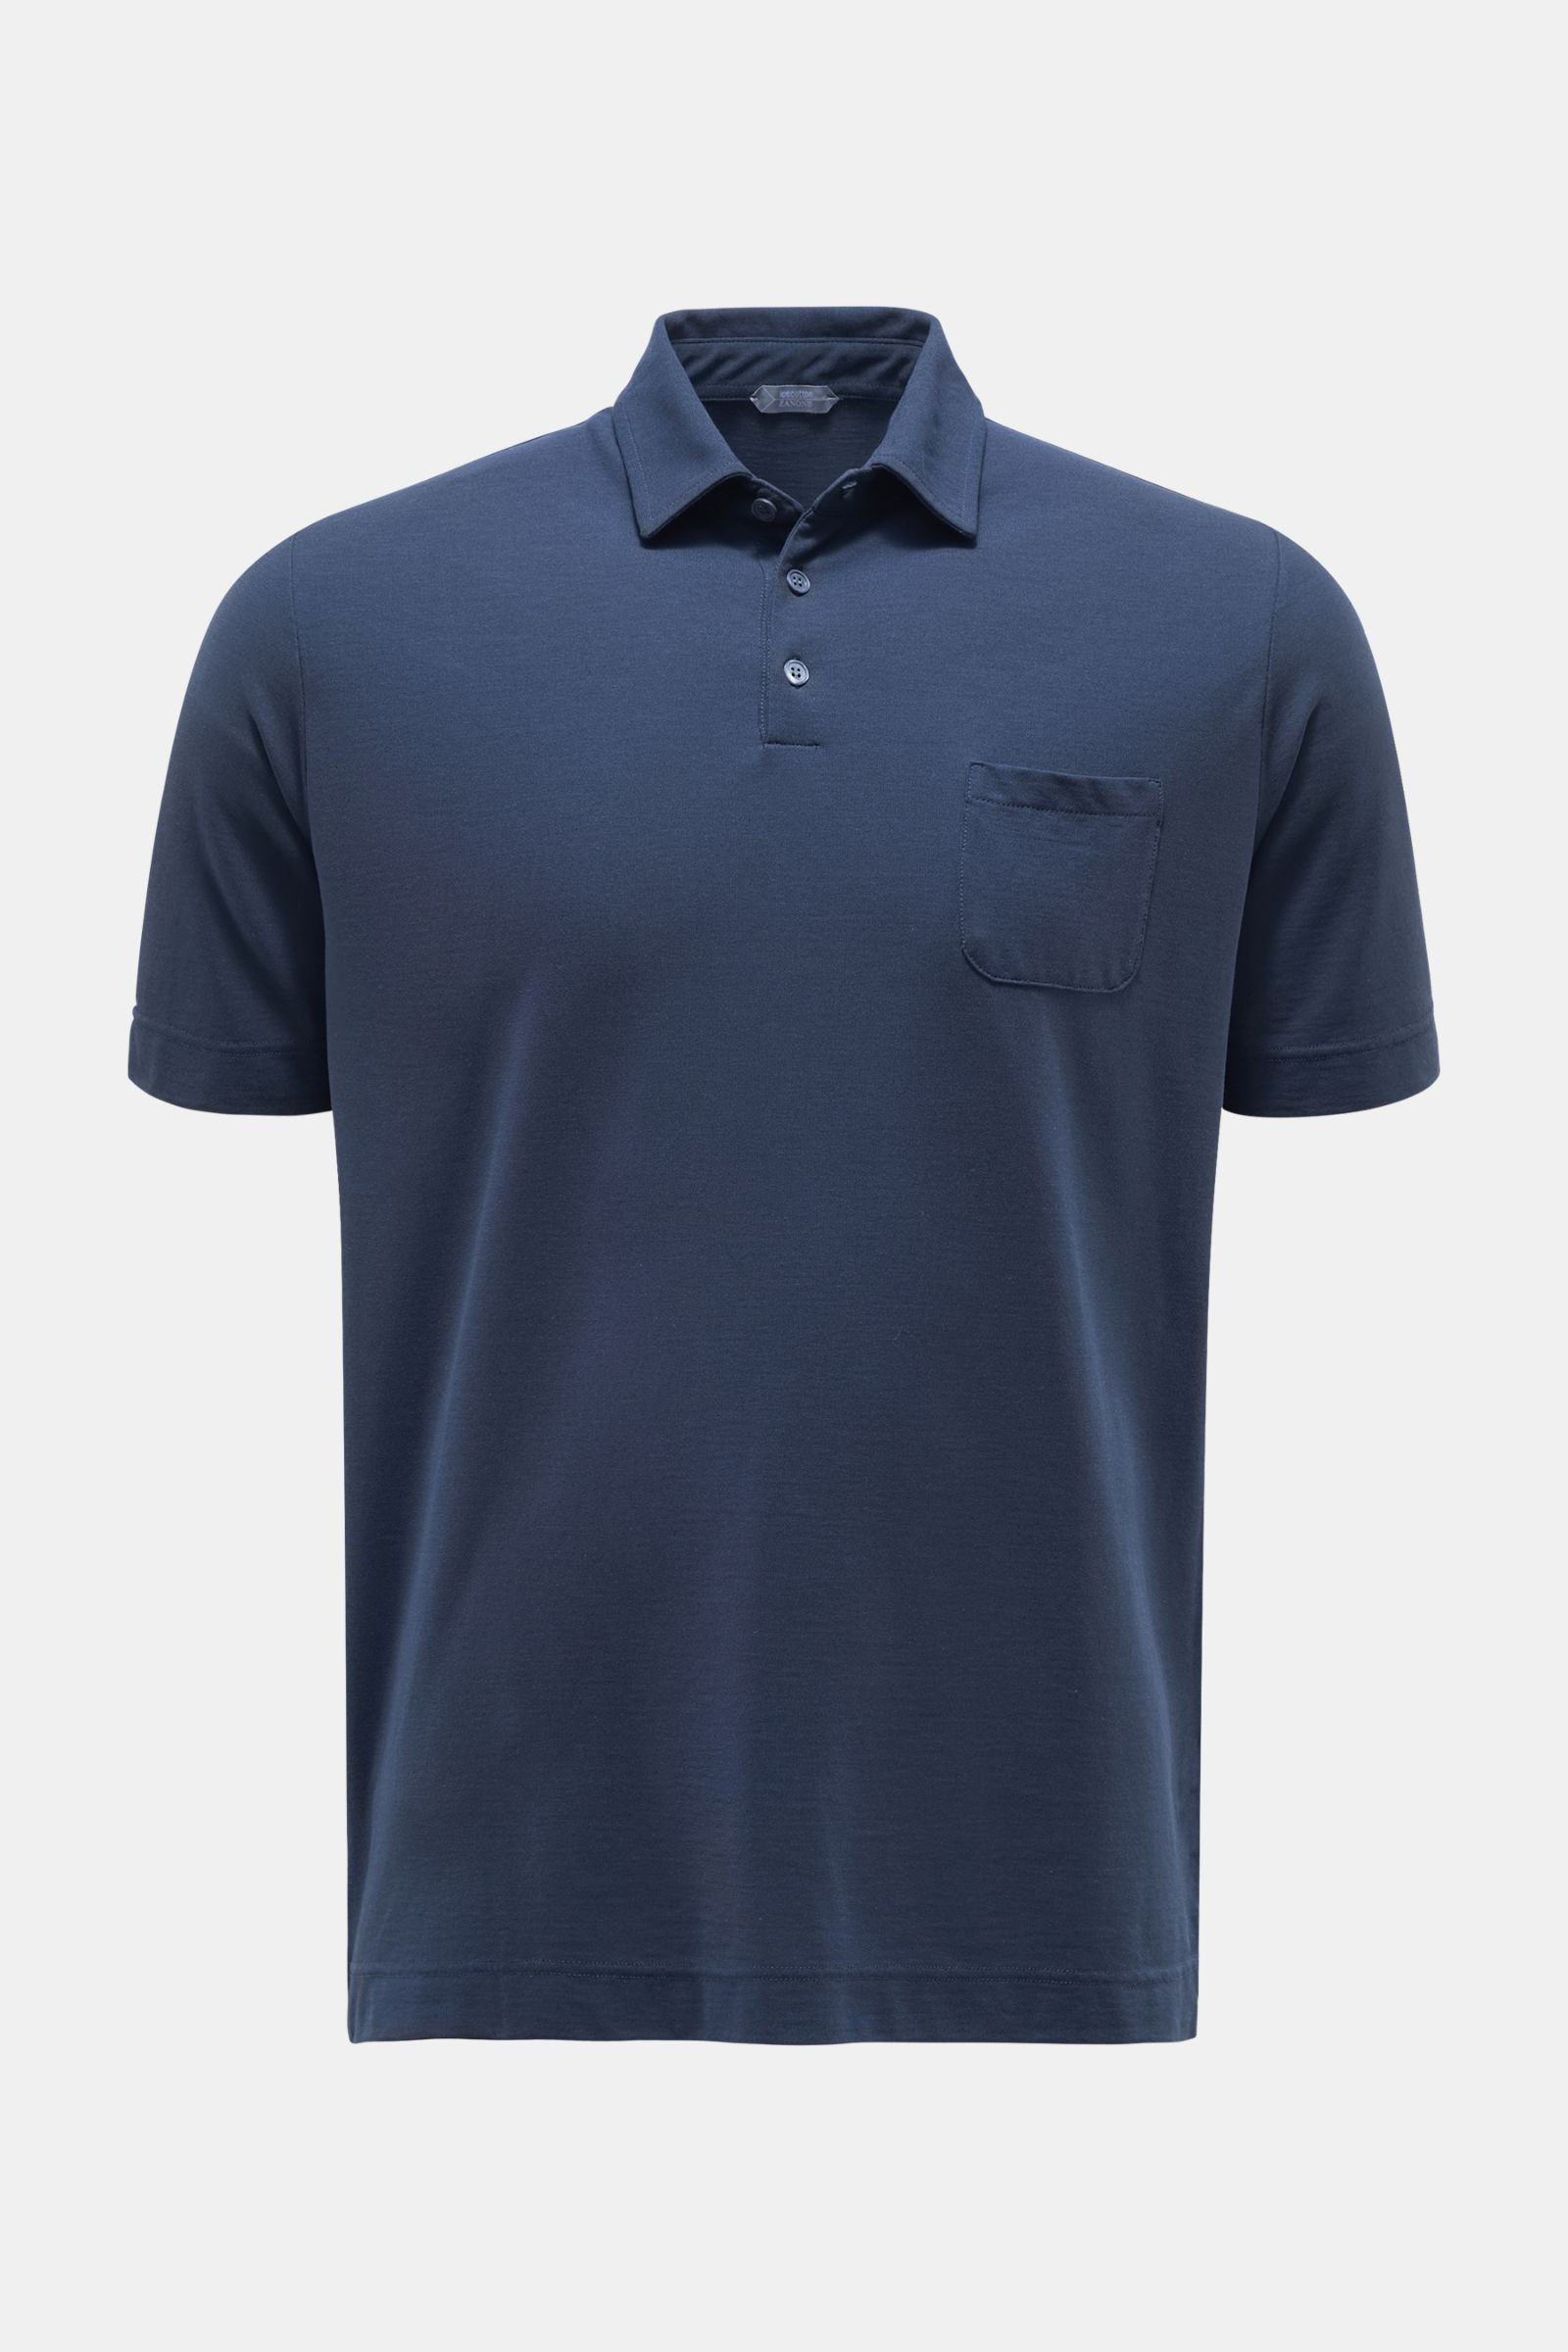 Jersey-Poloshirt dunkelblau